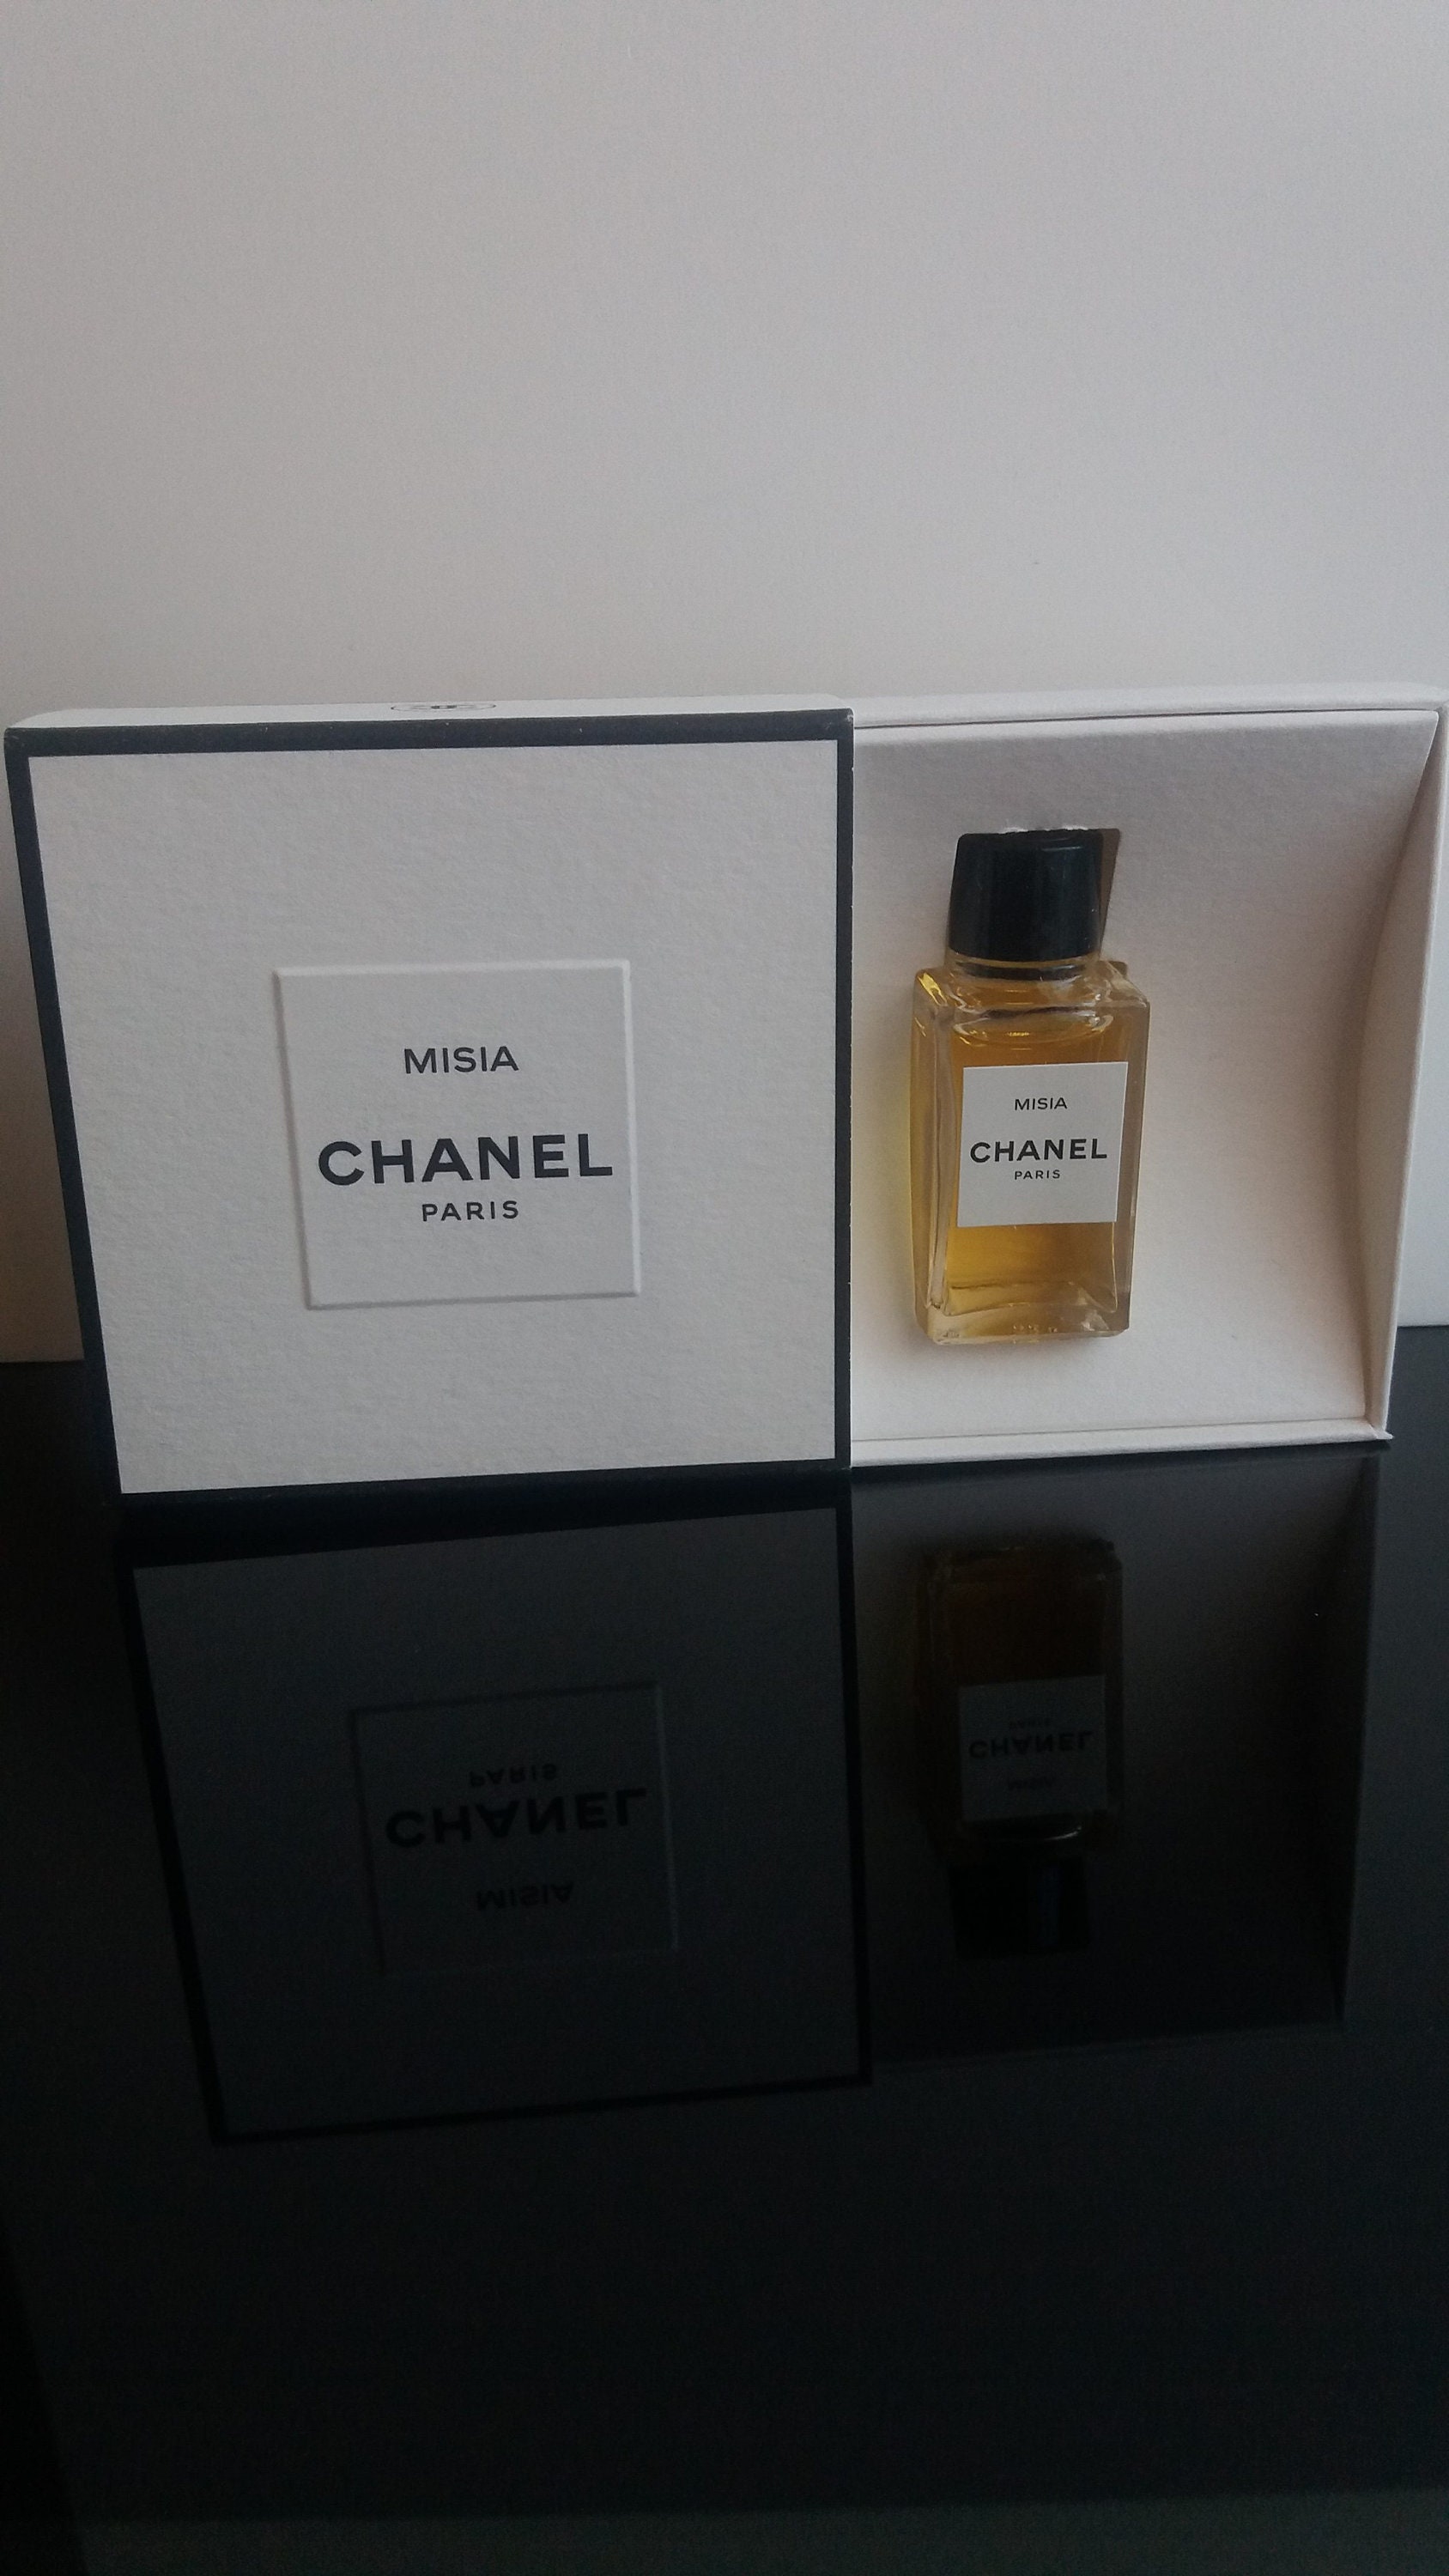 Chanel Misia Perfume Review